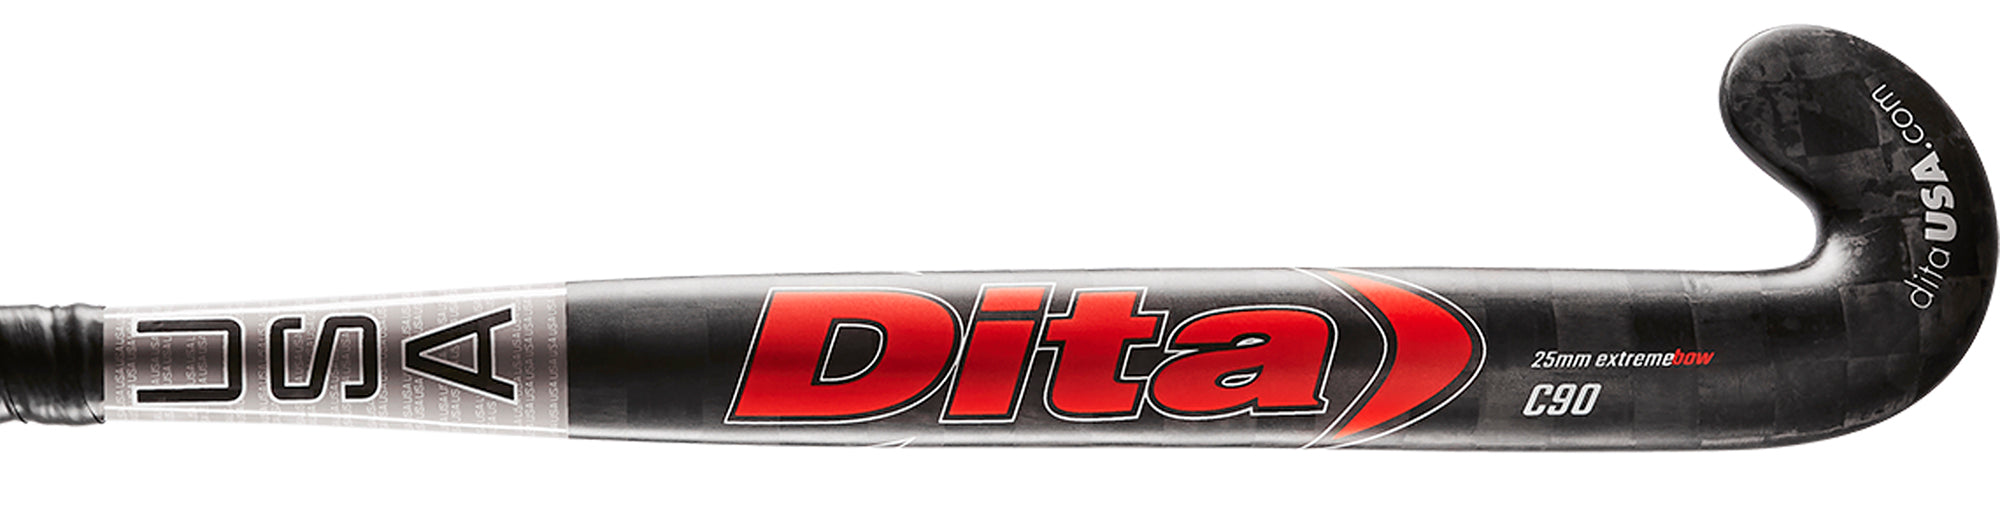 Dita USA C90 - For 3D Skills, Drag Flicks